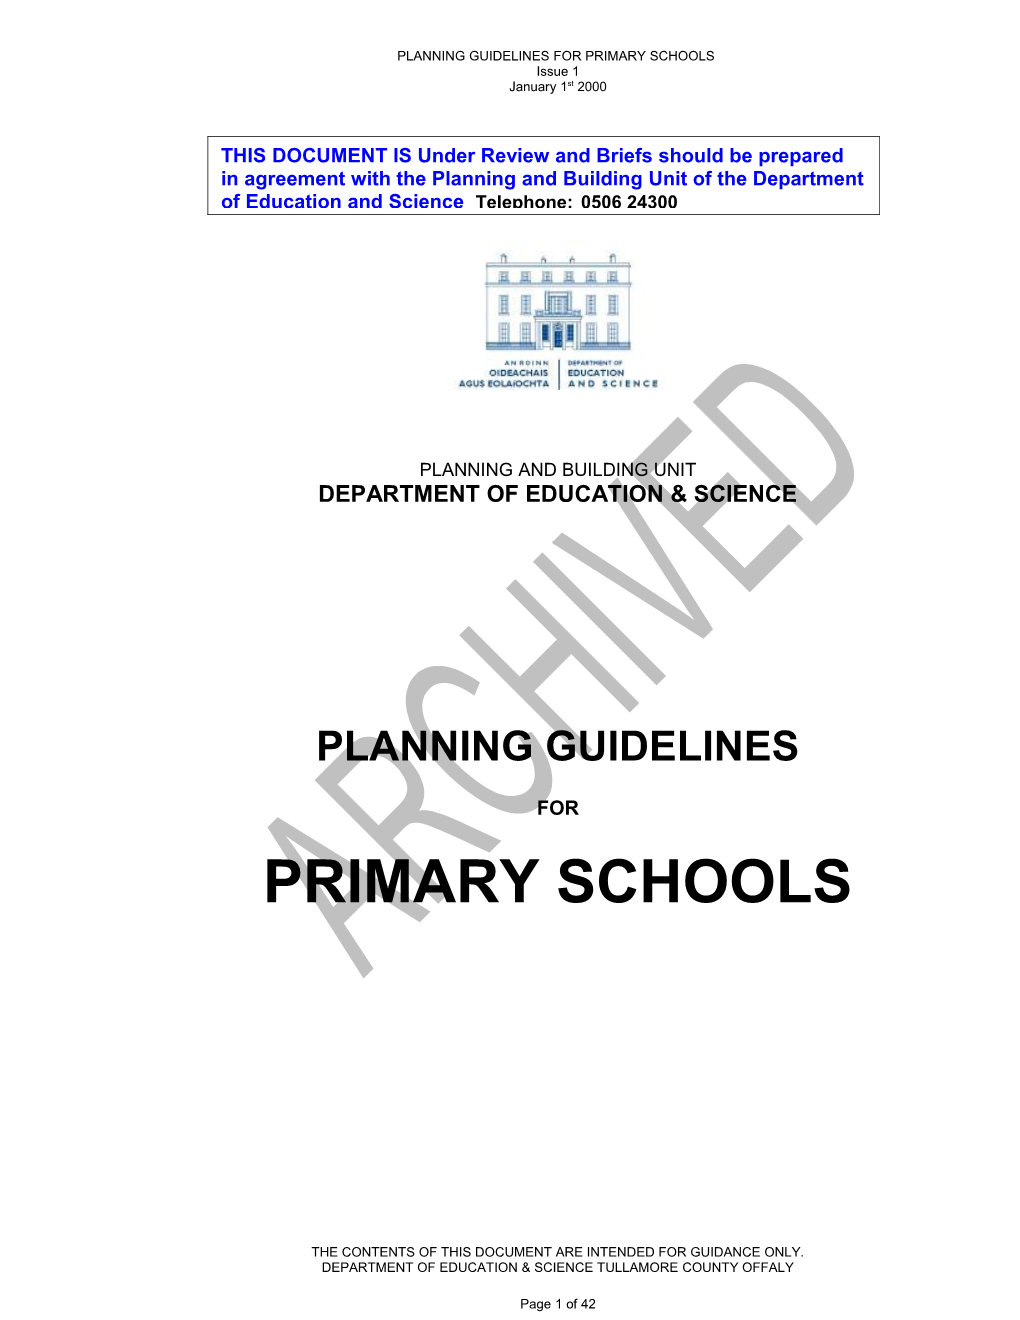 General Design Guidelines for Primary Schools (File Format Word 300KB)